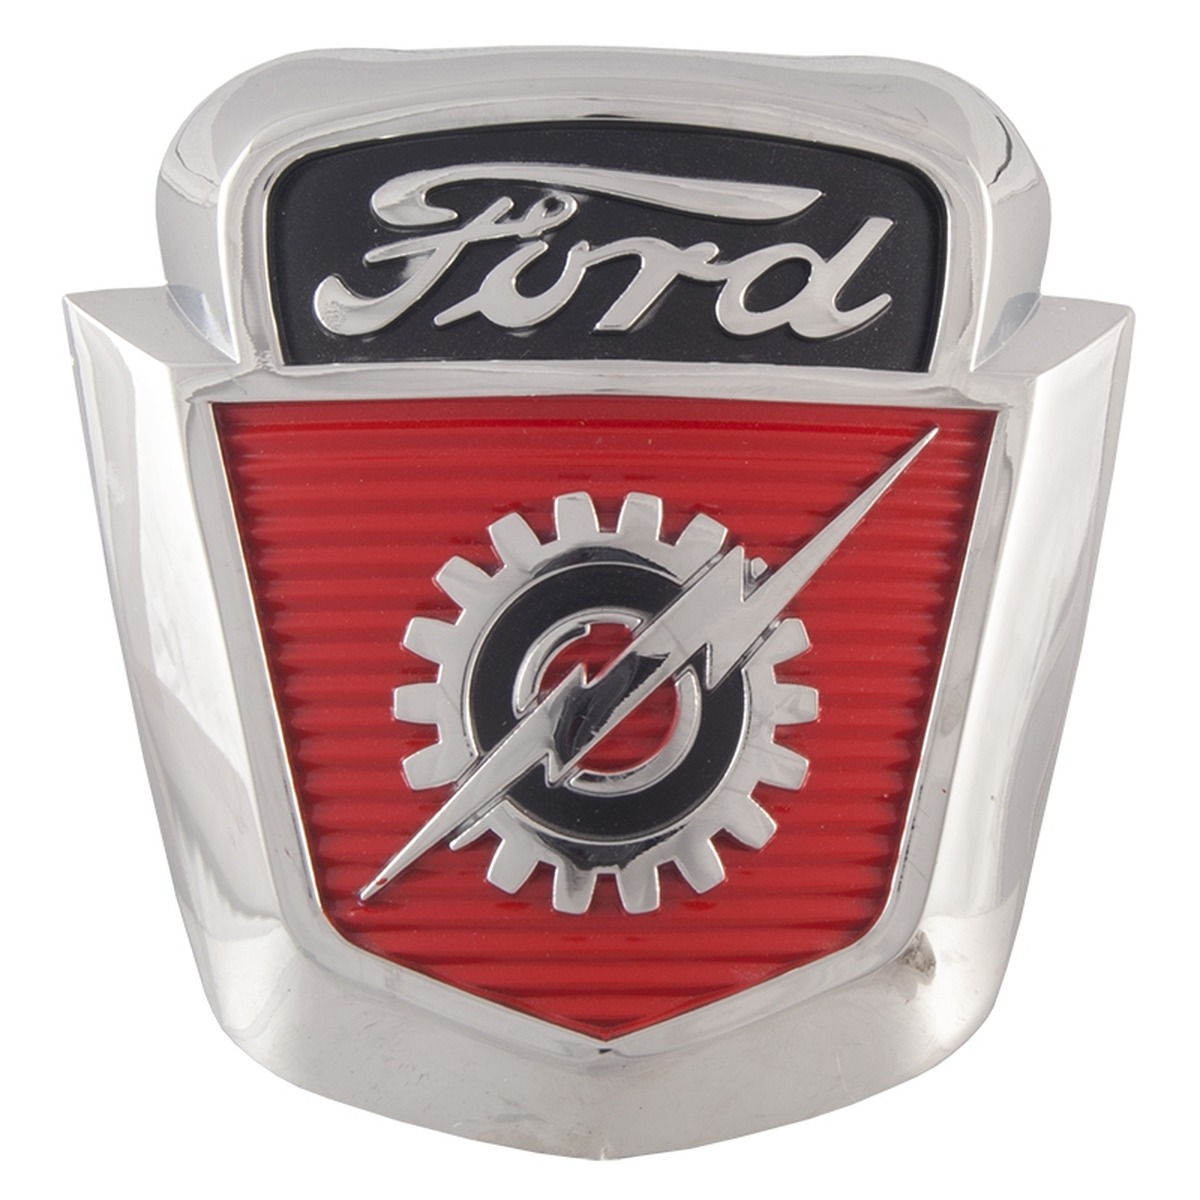 Bonnet/Hood Emblems - Ford - 1953-56 com